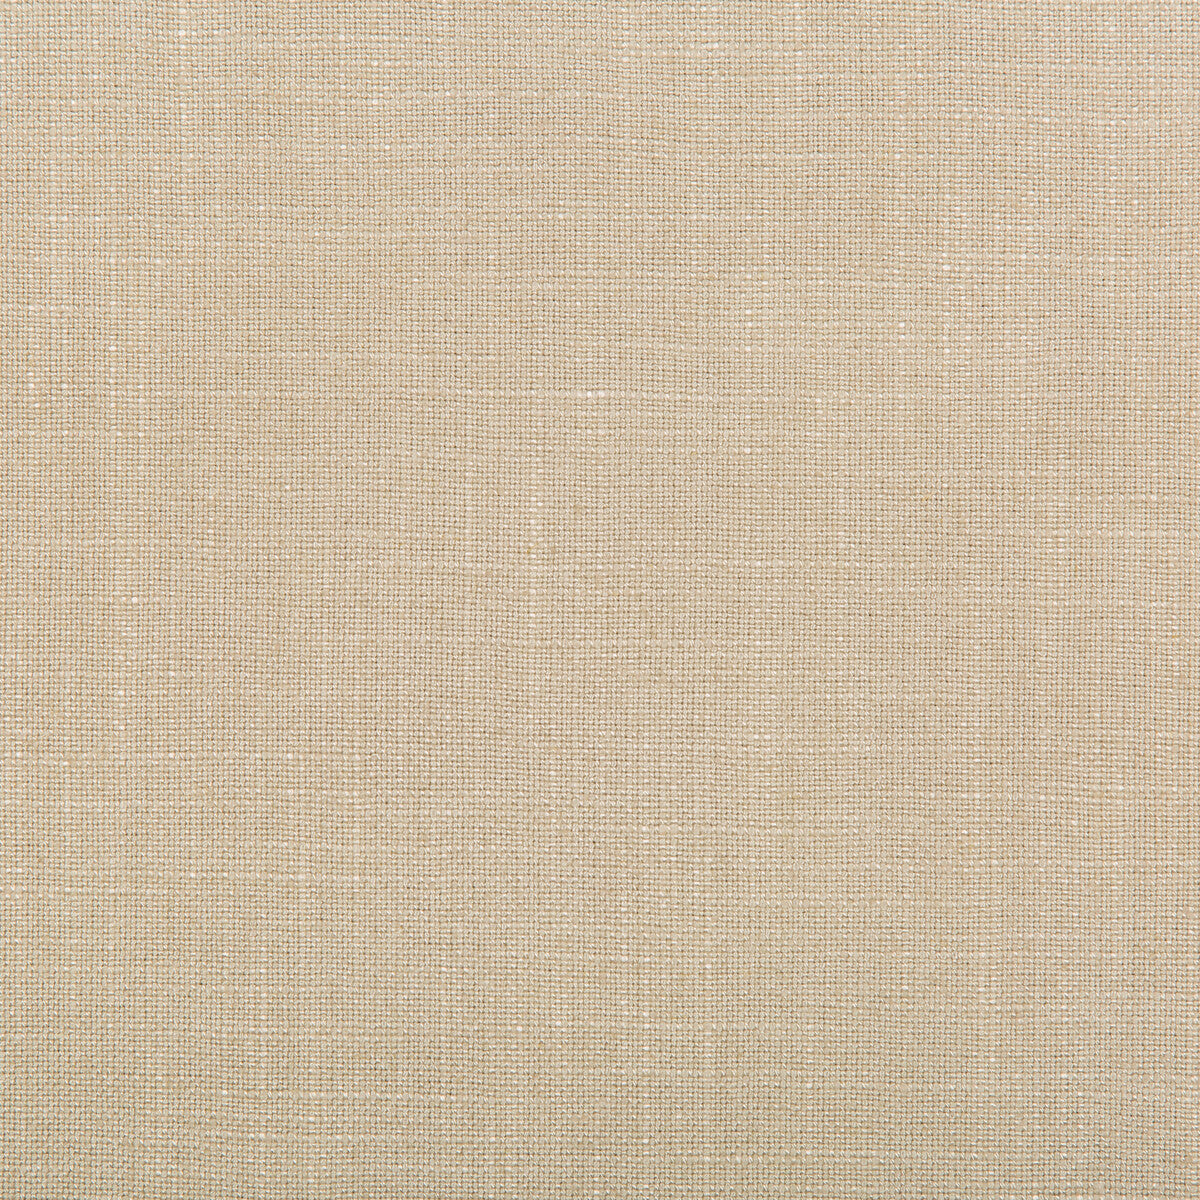 Aura fabric in sesame color - pattern 35520.1161.0 - by Kravet Design